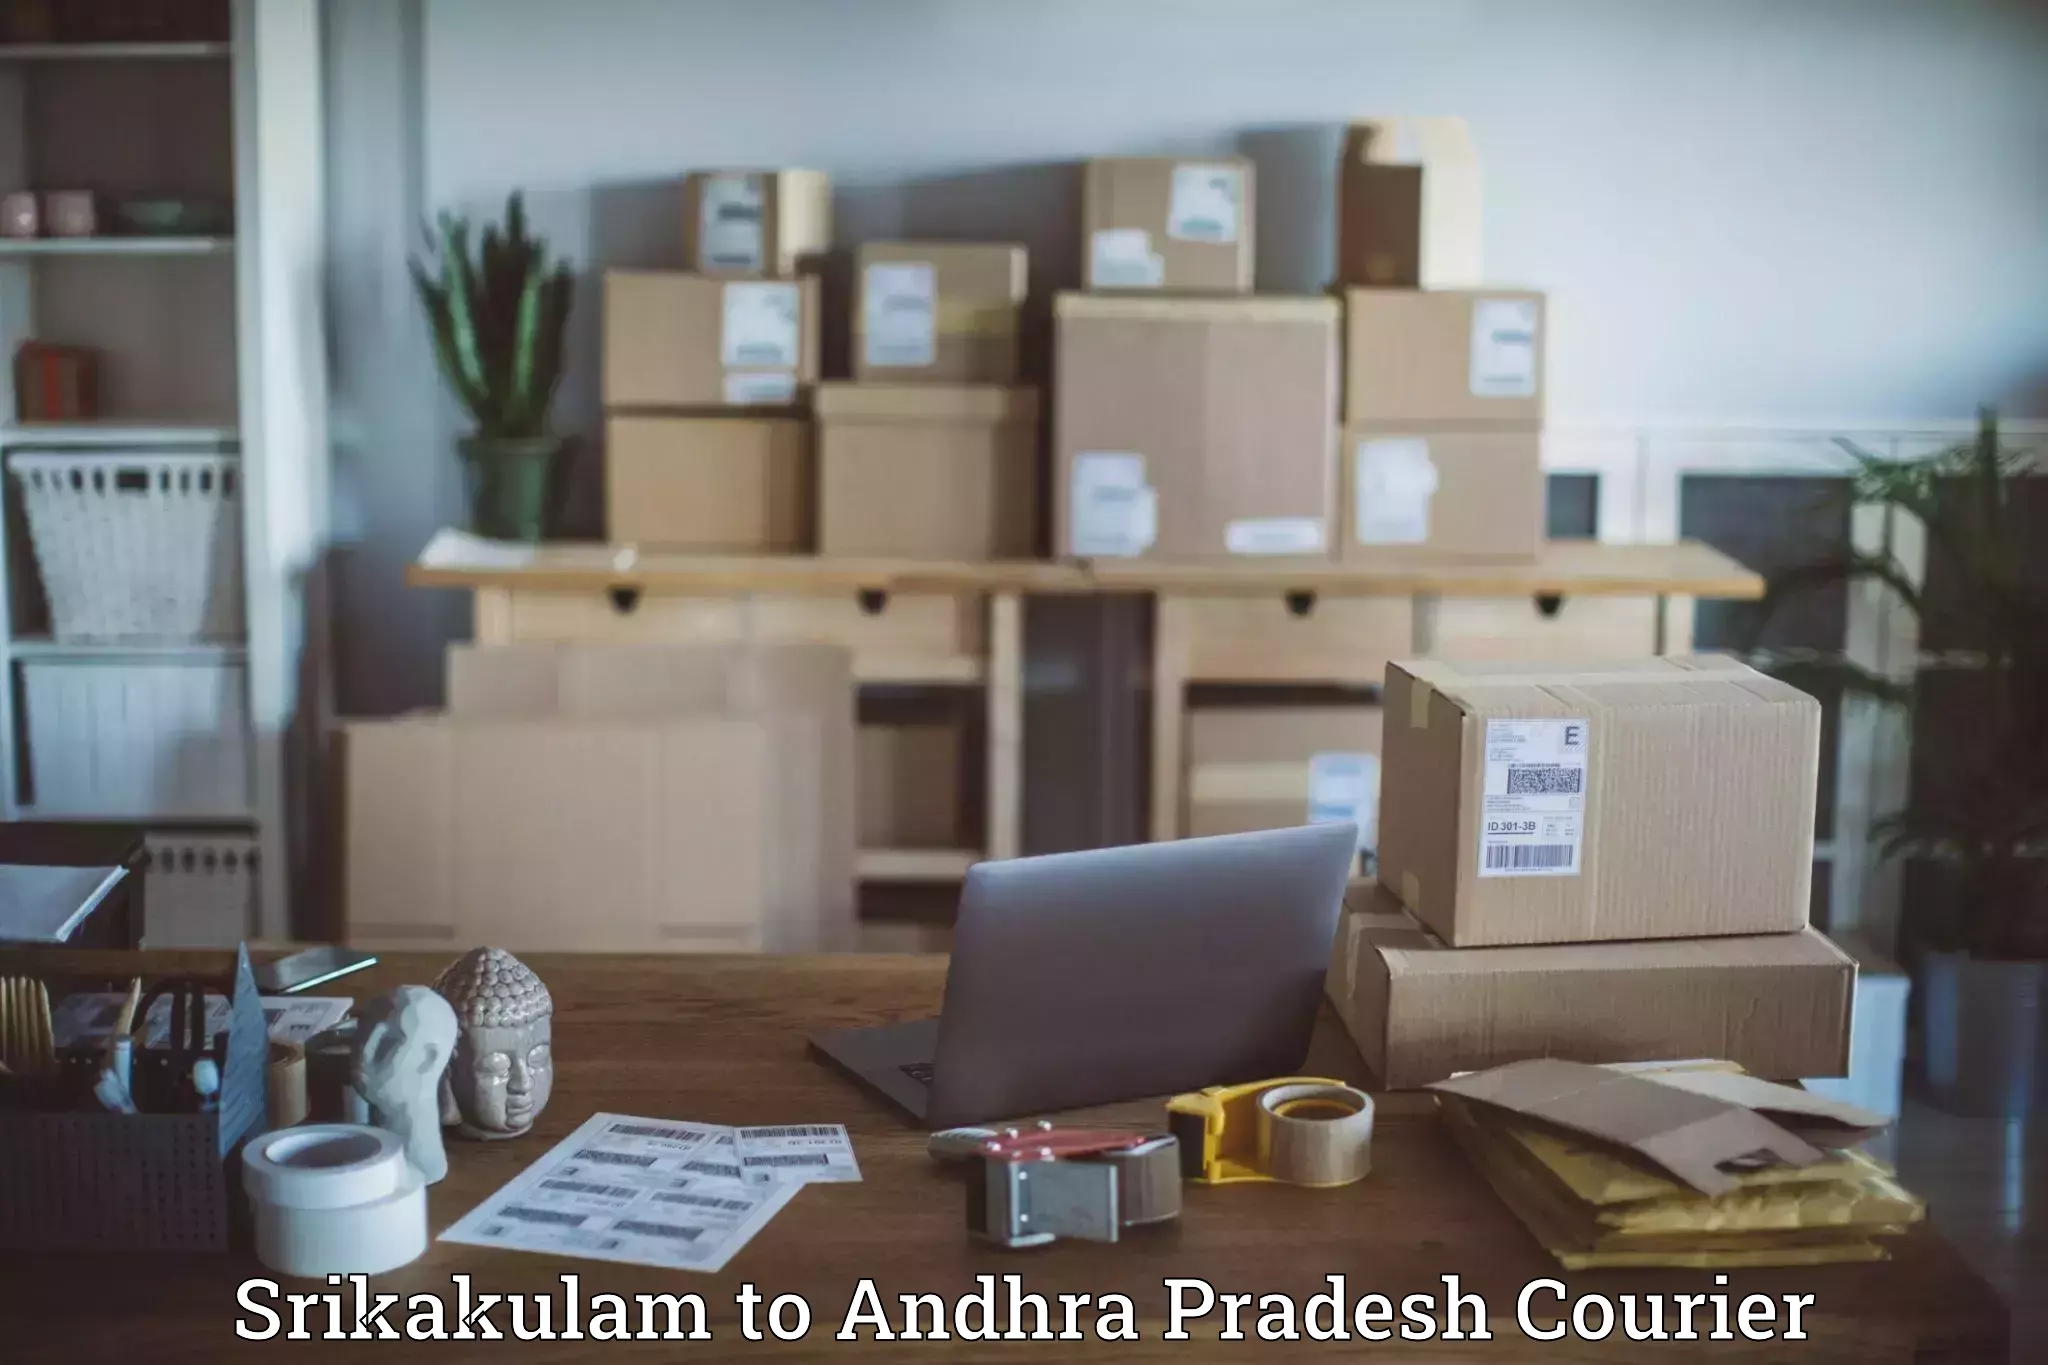 24-hour courier service Srikakulam to Guntur